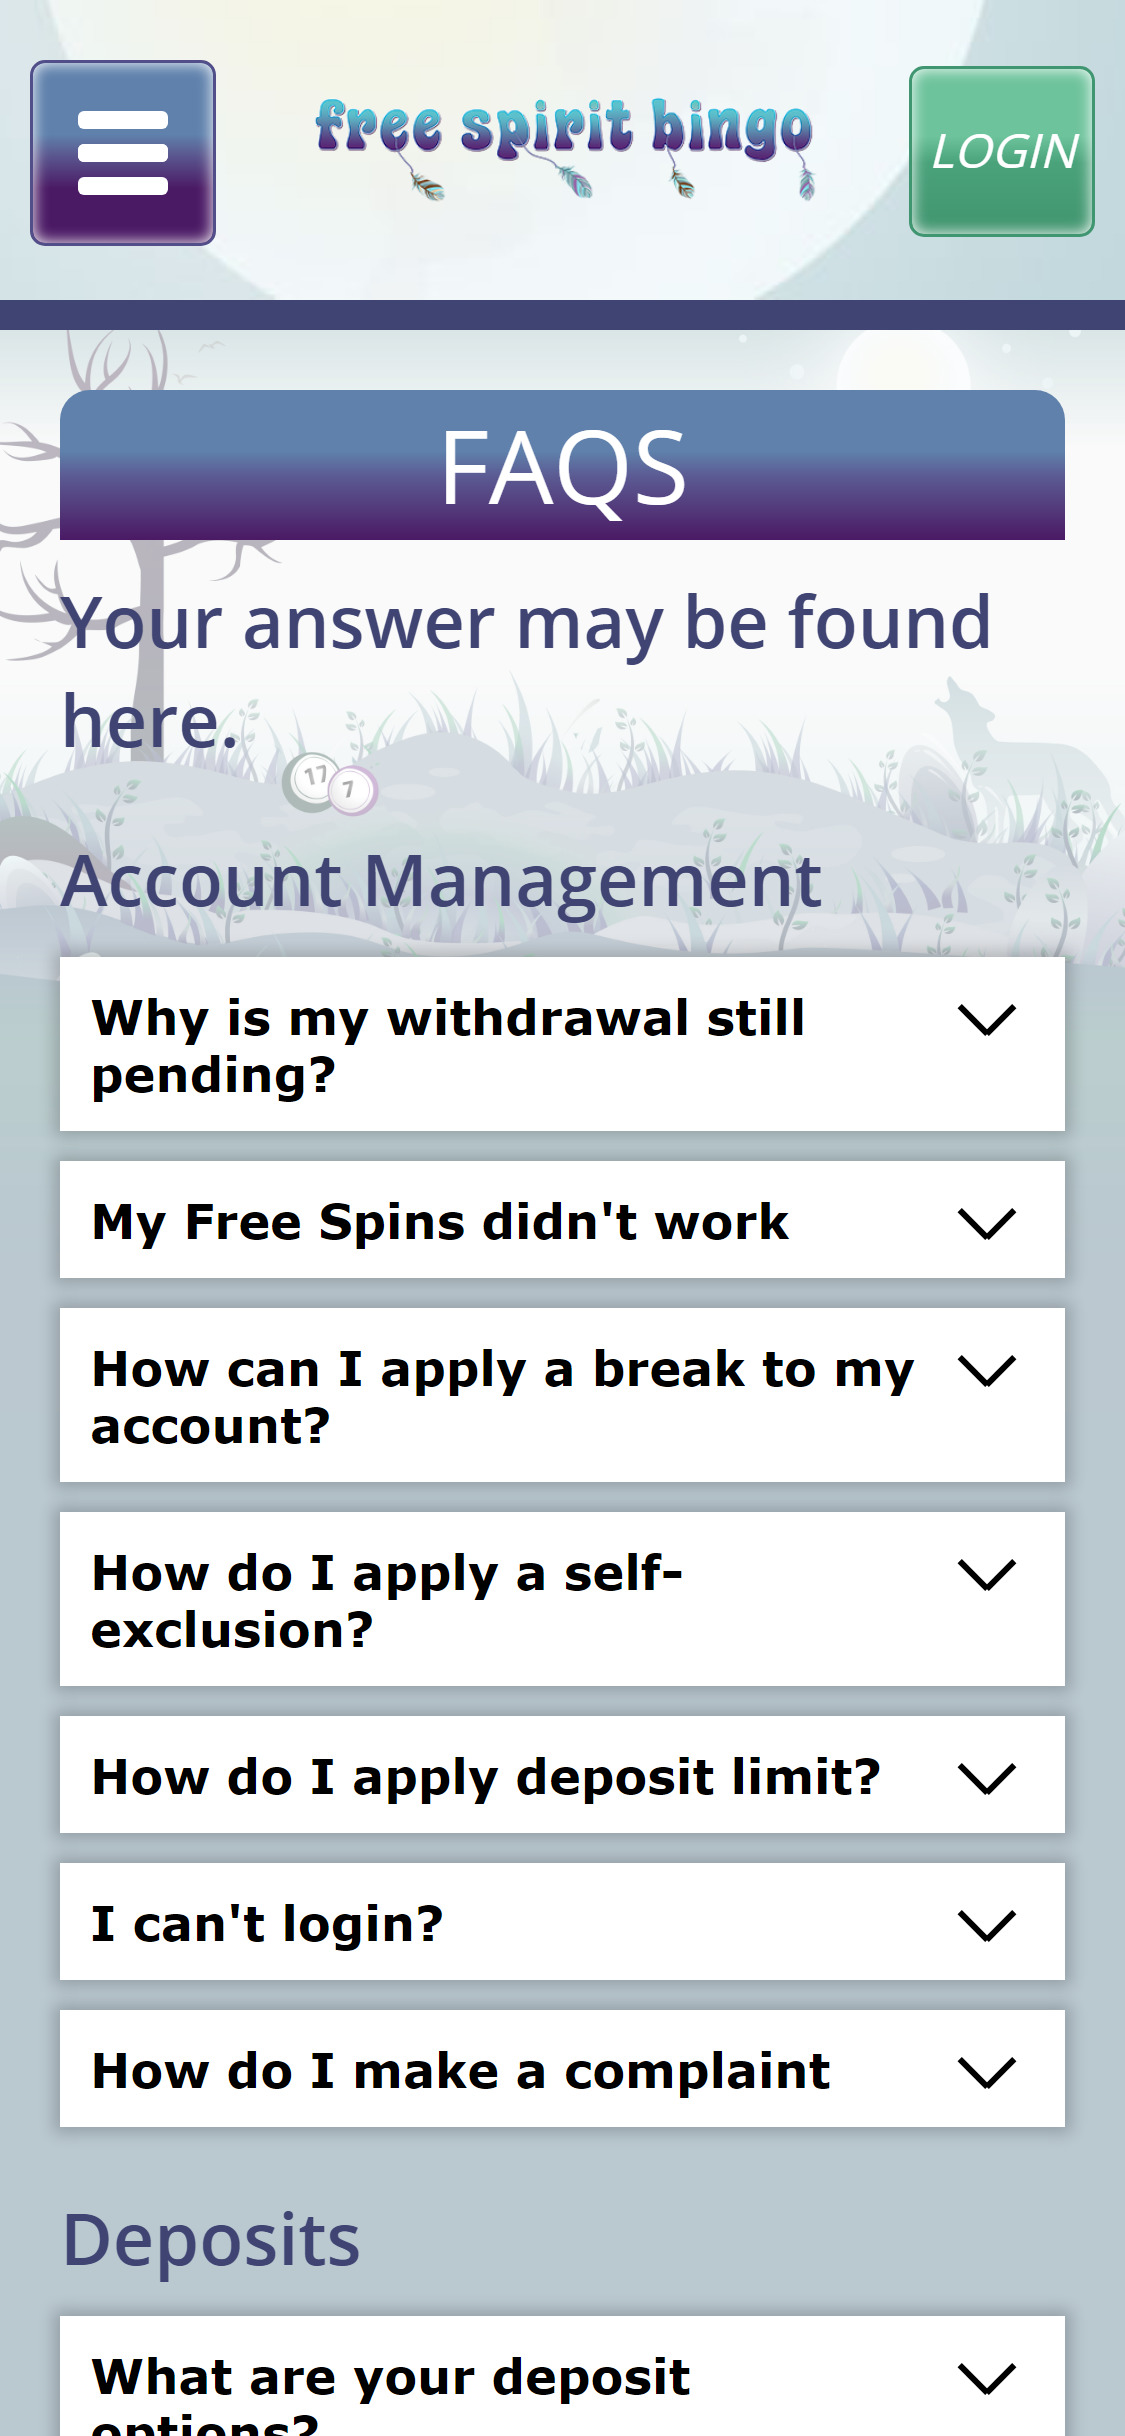 Free Spirit Bingo Casino Mobile Support Review